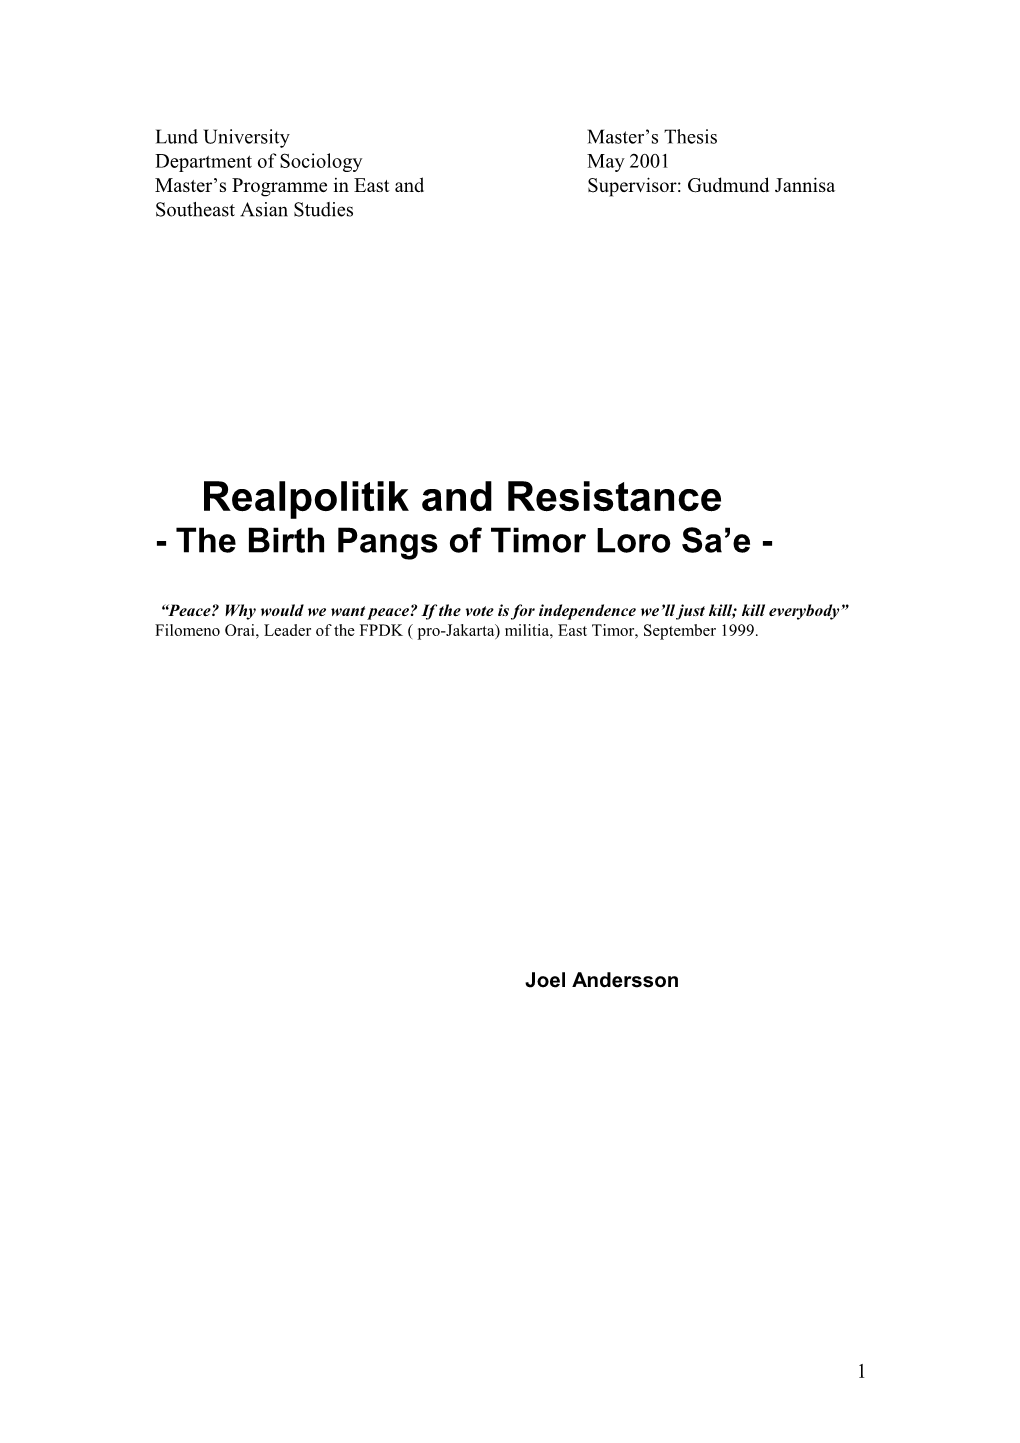 Realpolitik and Resistance - the Birth Pangs of Timor Loro Sa’E